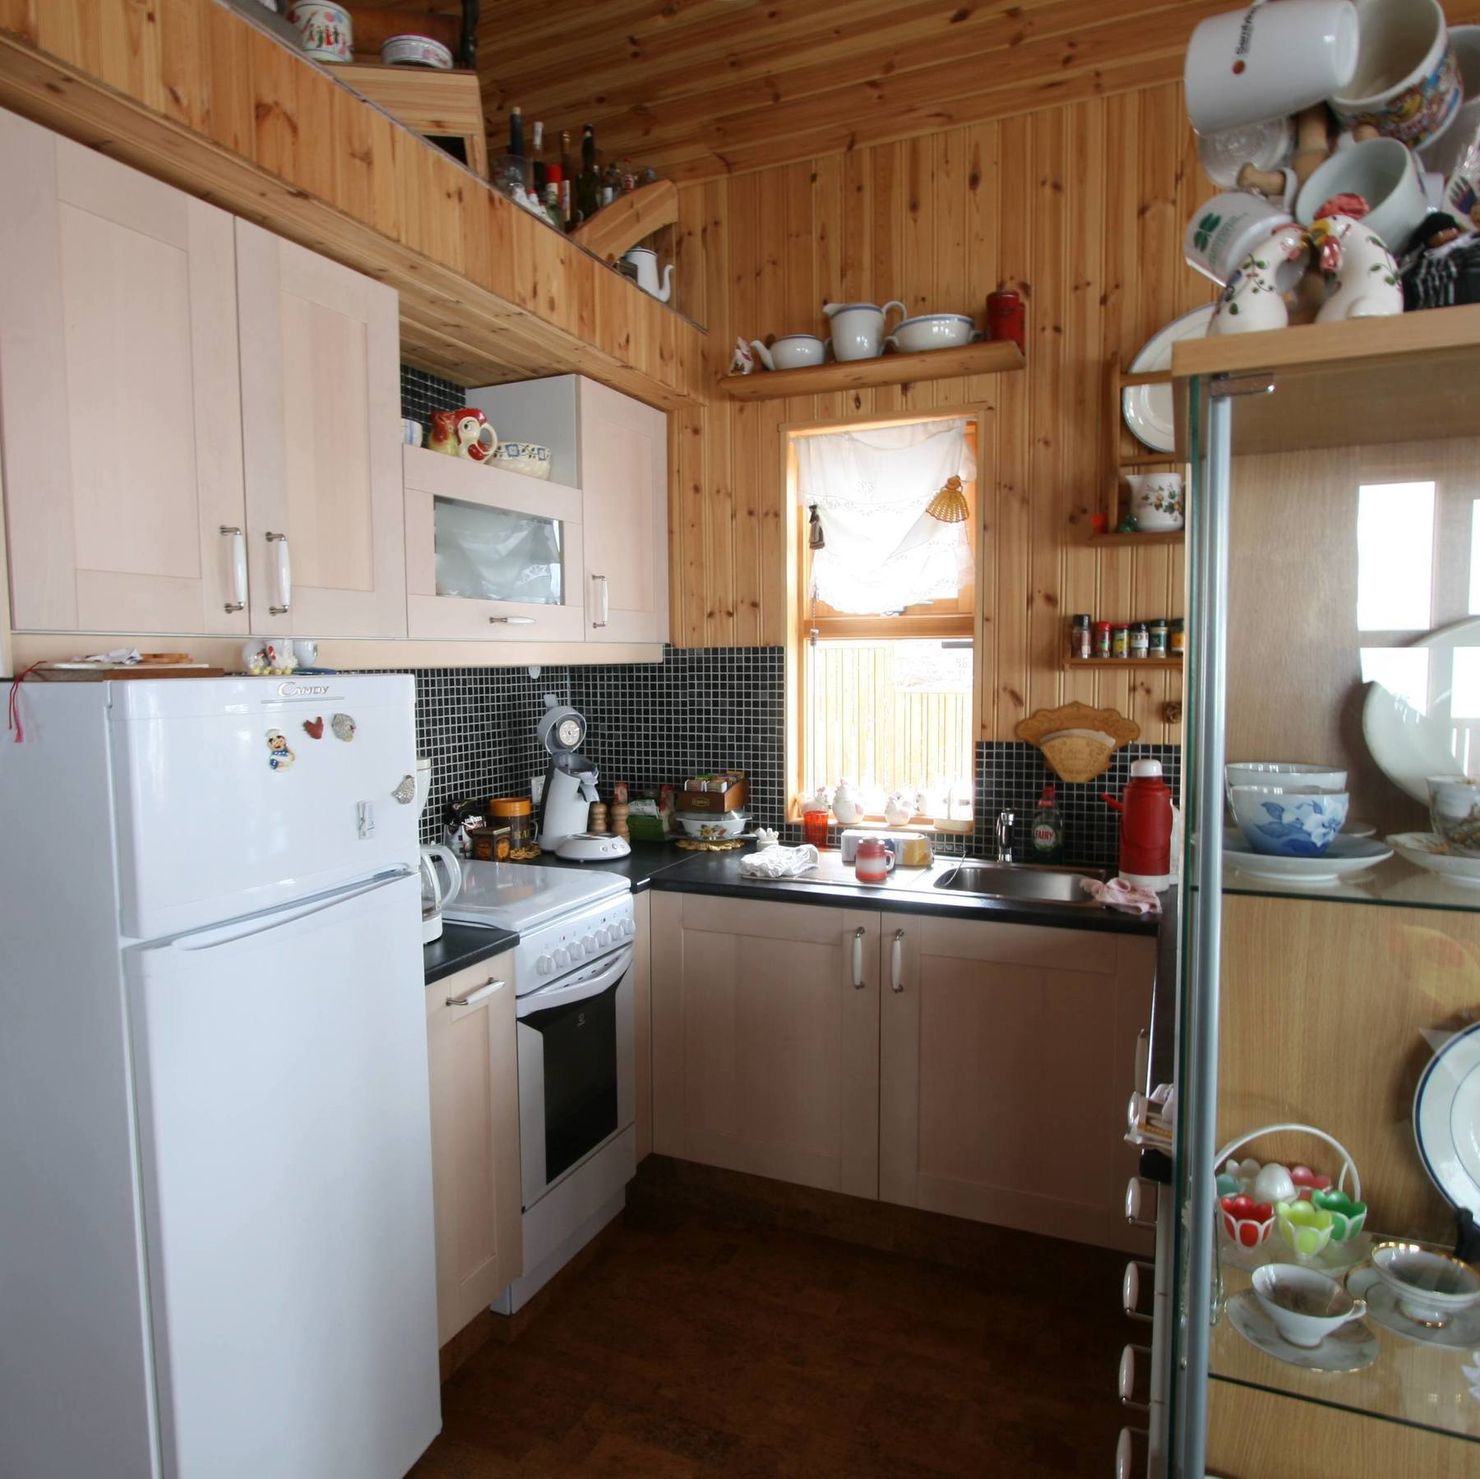 Functional kitchen with large fridge